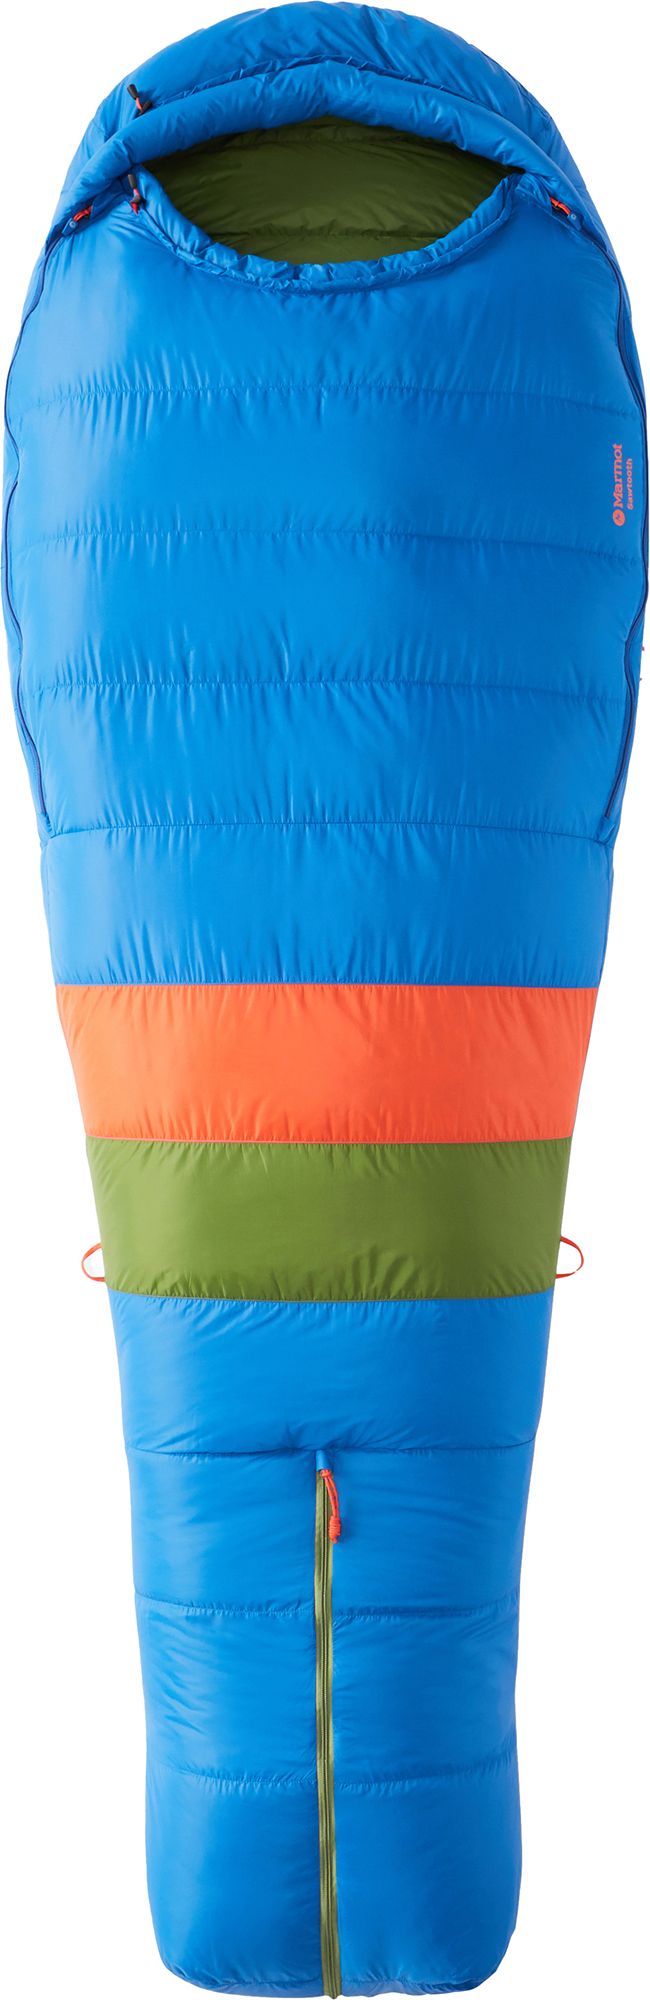 Photos - Suitcase / Backpack Cover Marmot Sawtooth 15 Sleeping Bag, Men's, Long Extra Wide, Foliage/Dark Azur 